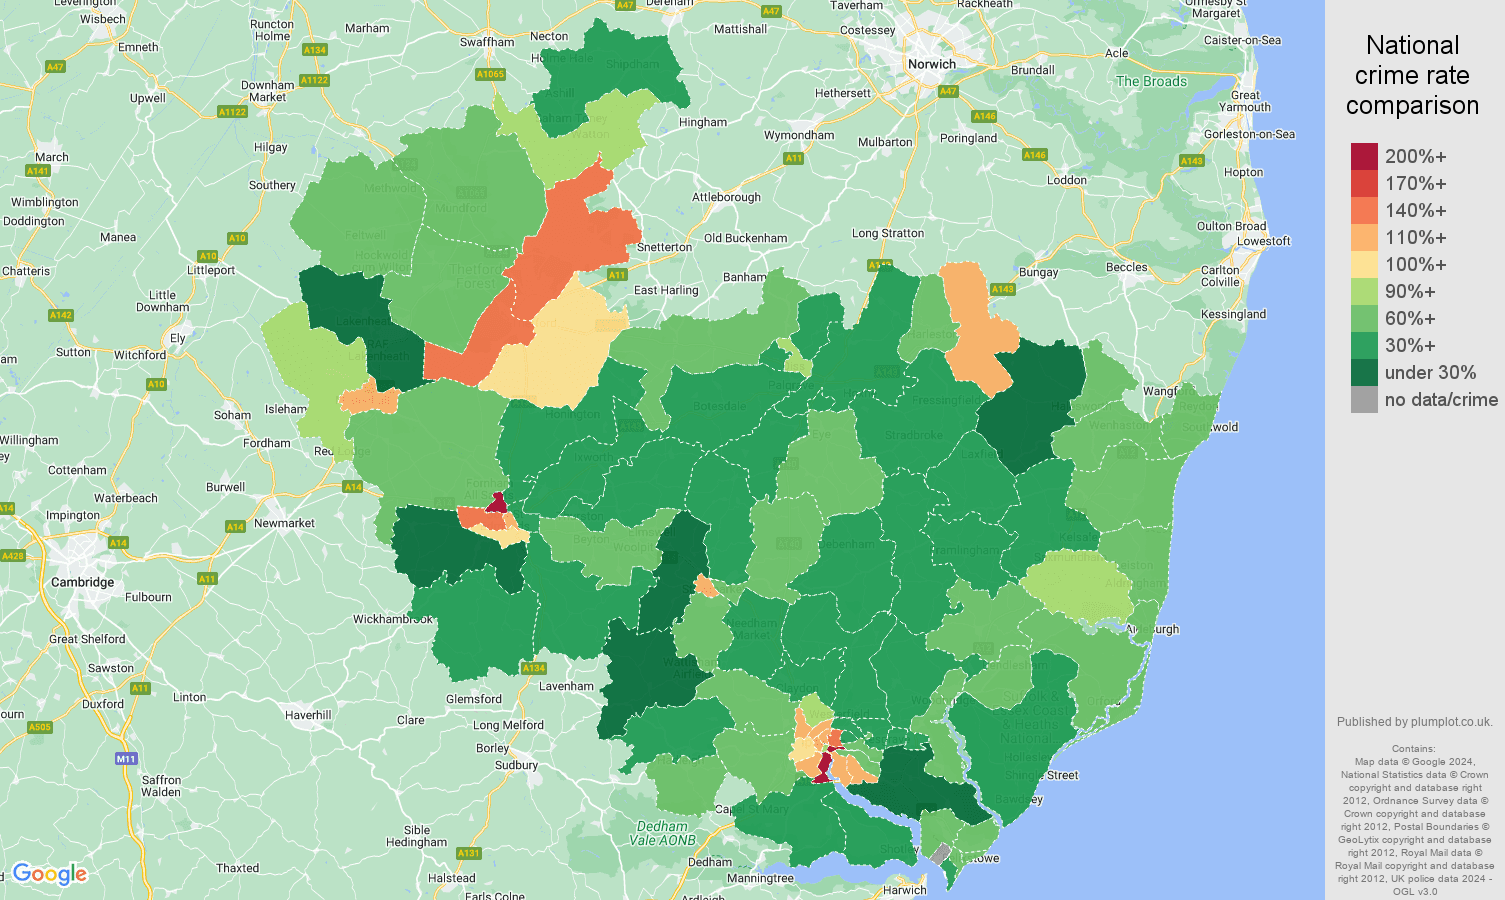 Ipswich criminal damage and arson crime rate comparison map